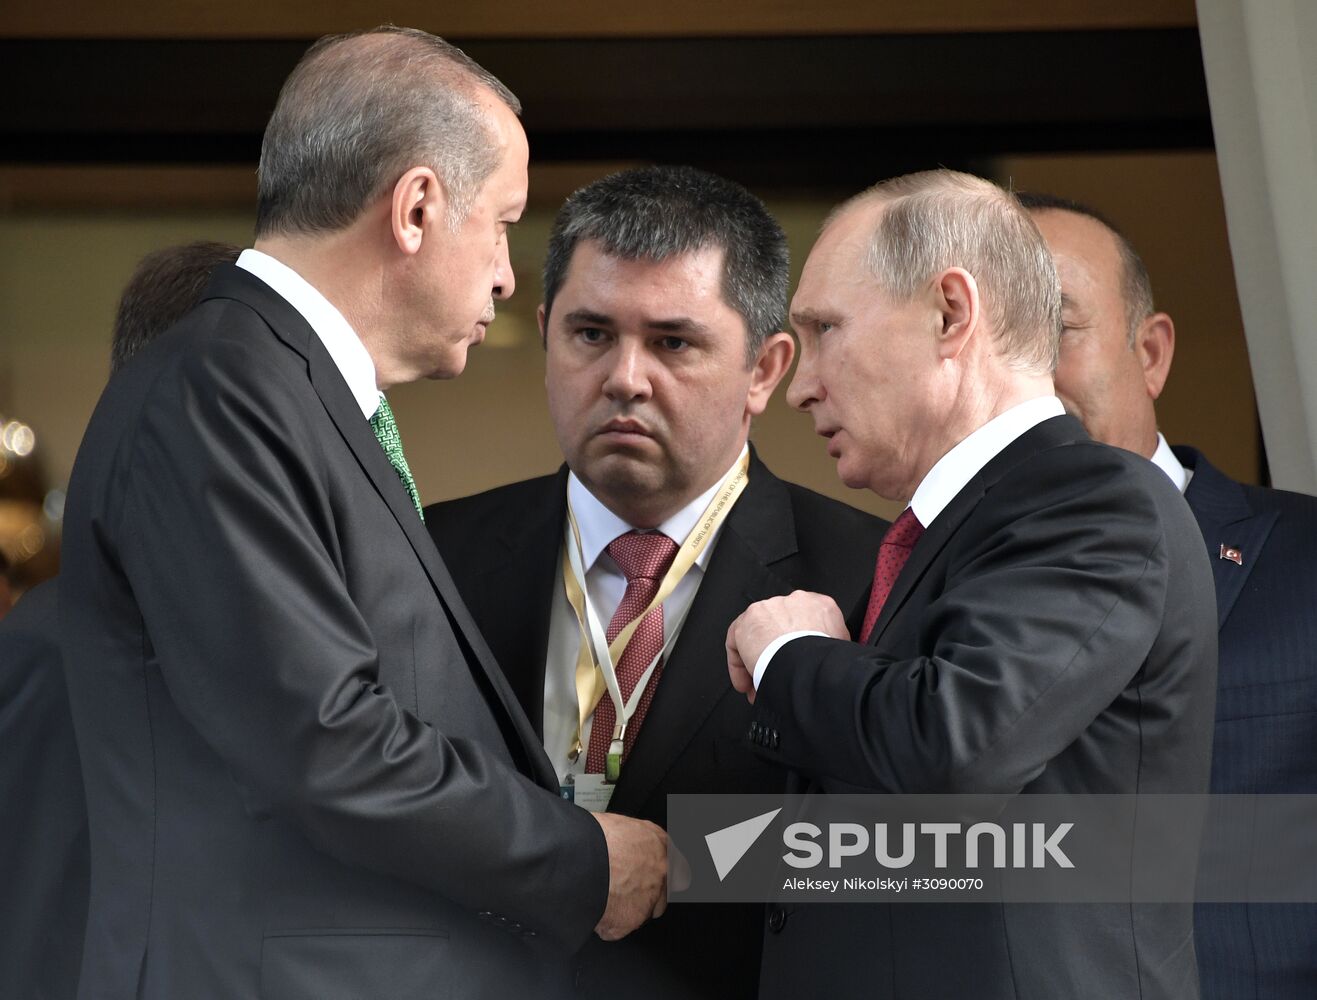 Vladimir Putin meets with Turkish president Recep Tayyip Erdogan